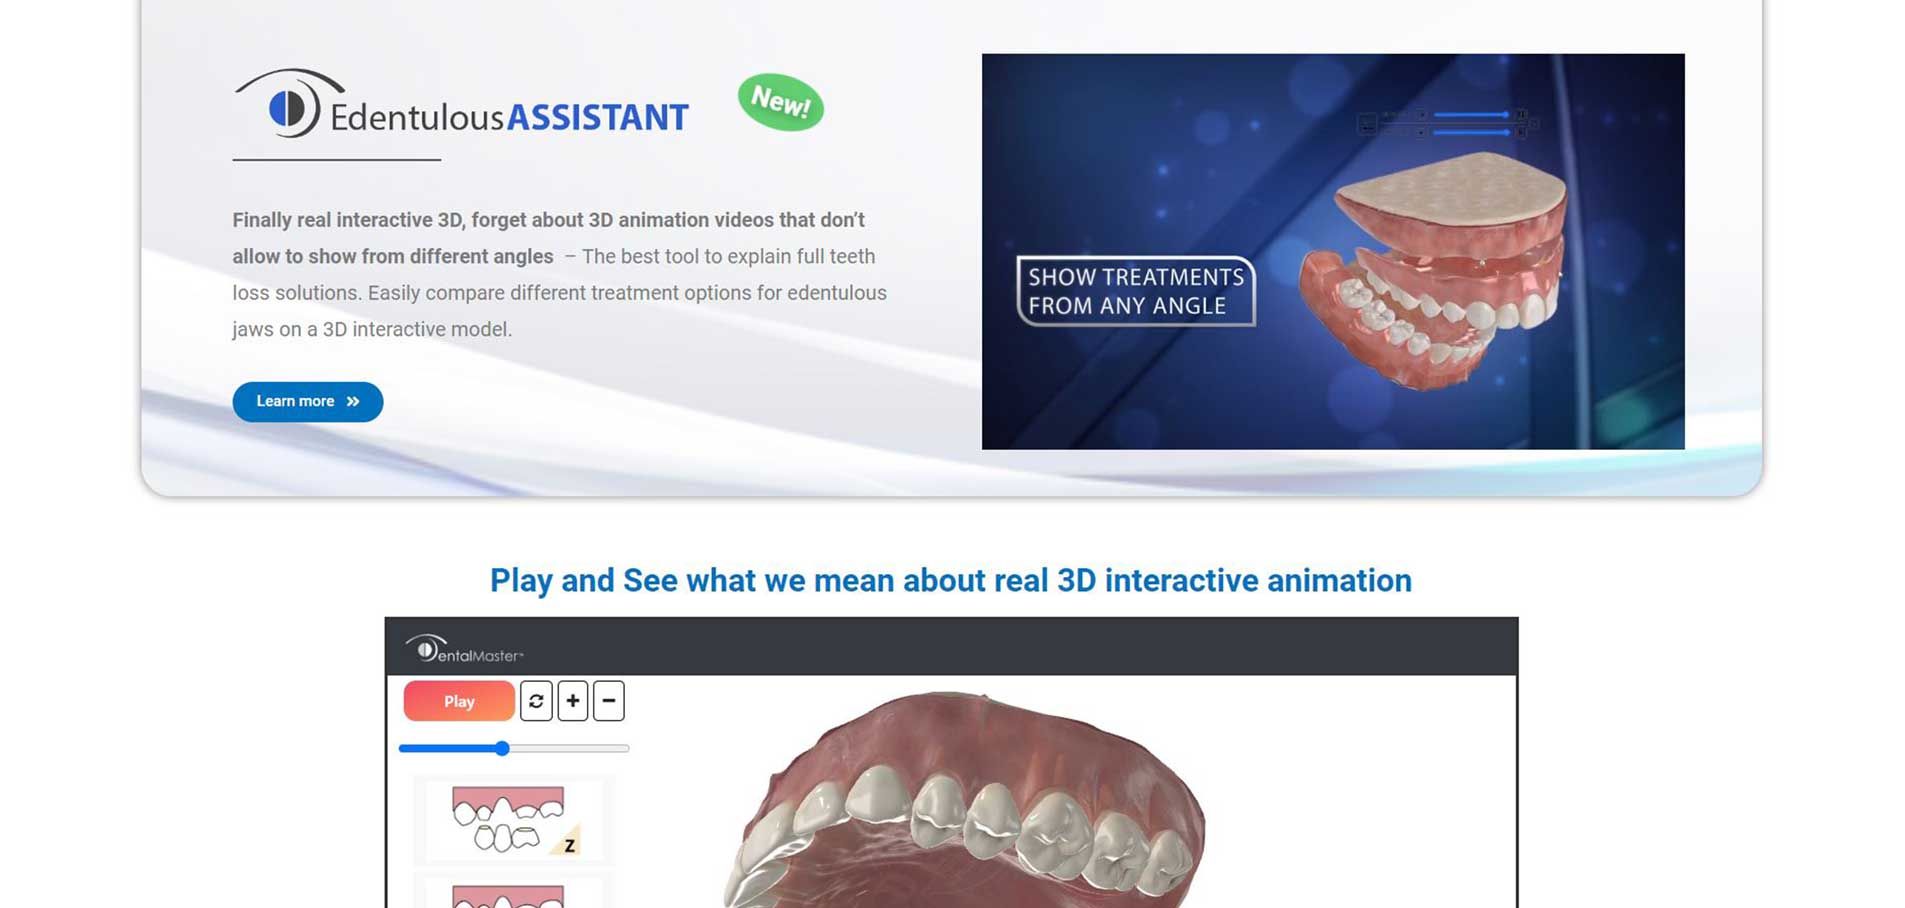 3d-DentalMaster-screens1a-6